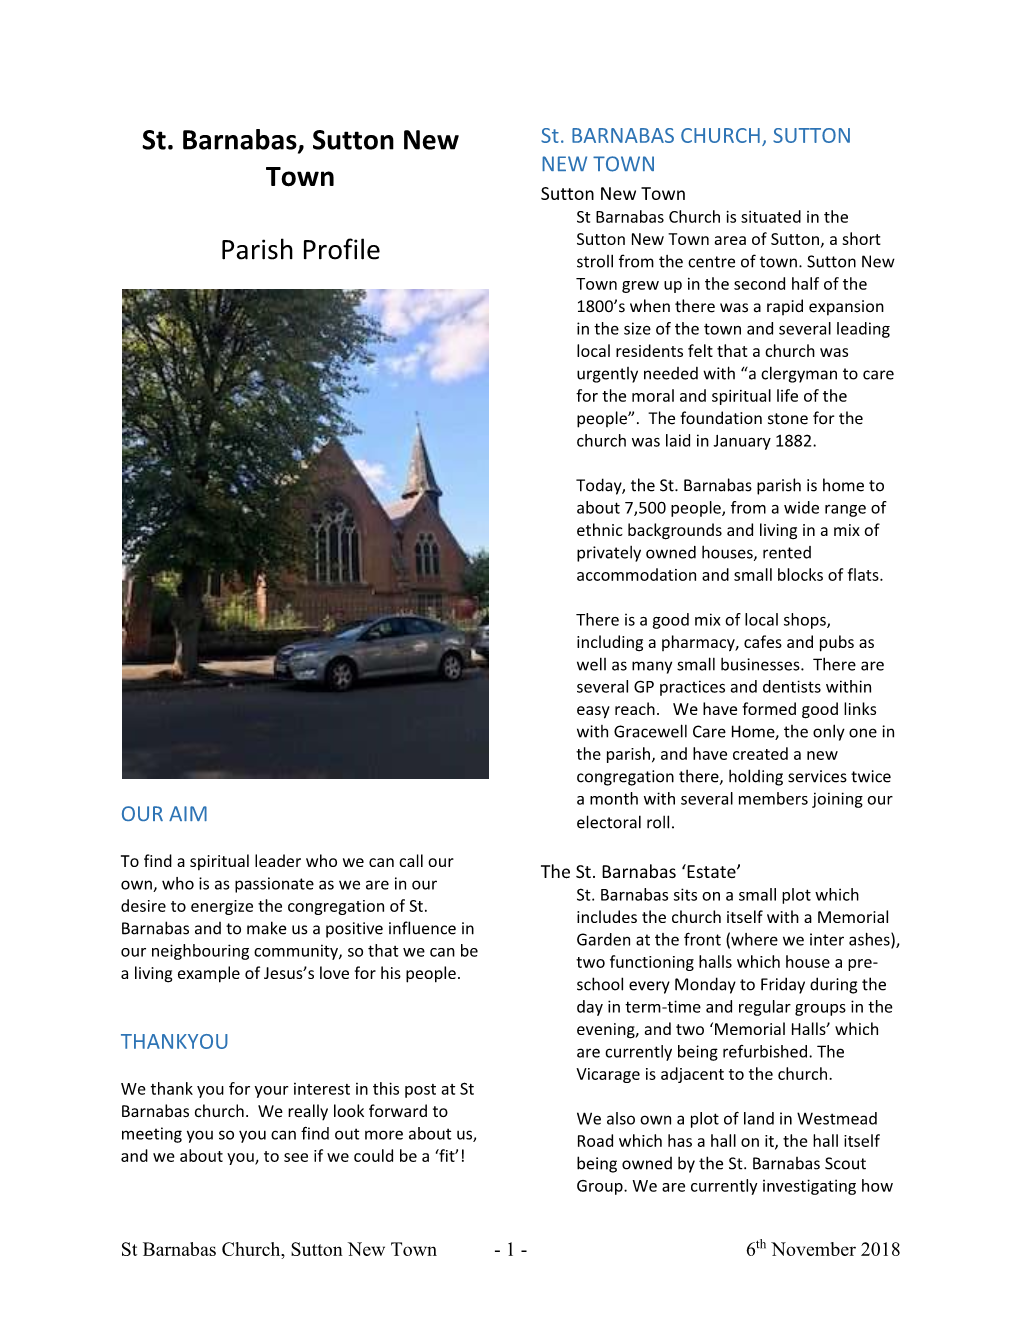 St. Barnabas, Sutton New Town Parish Profile